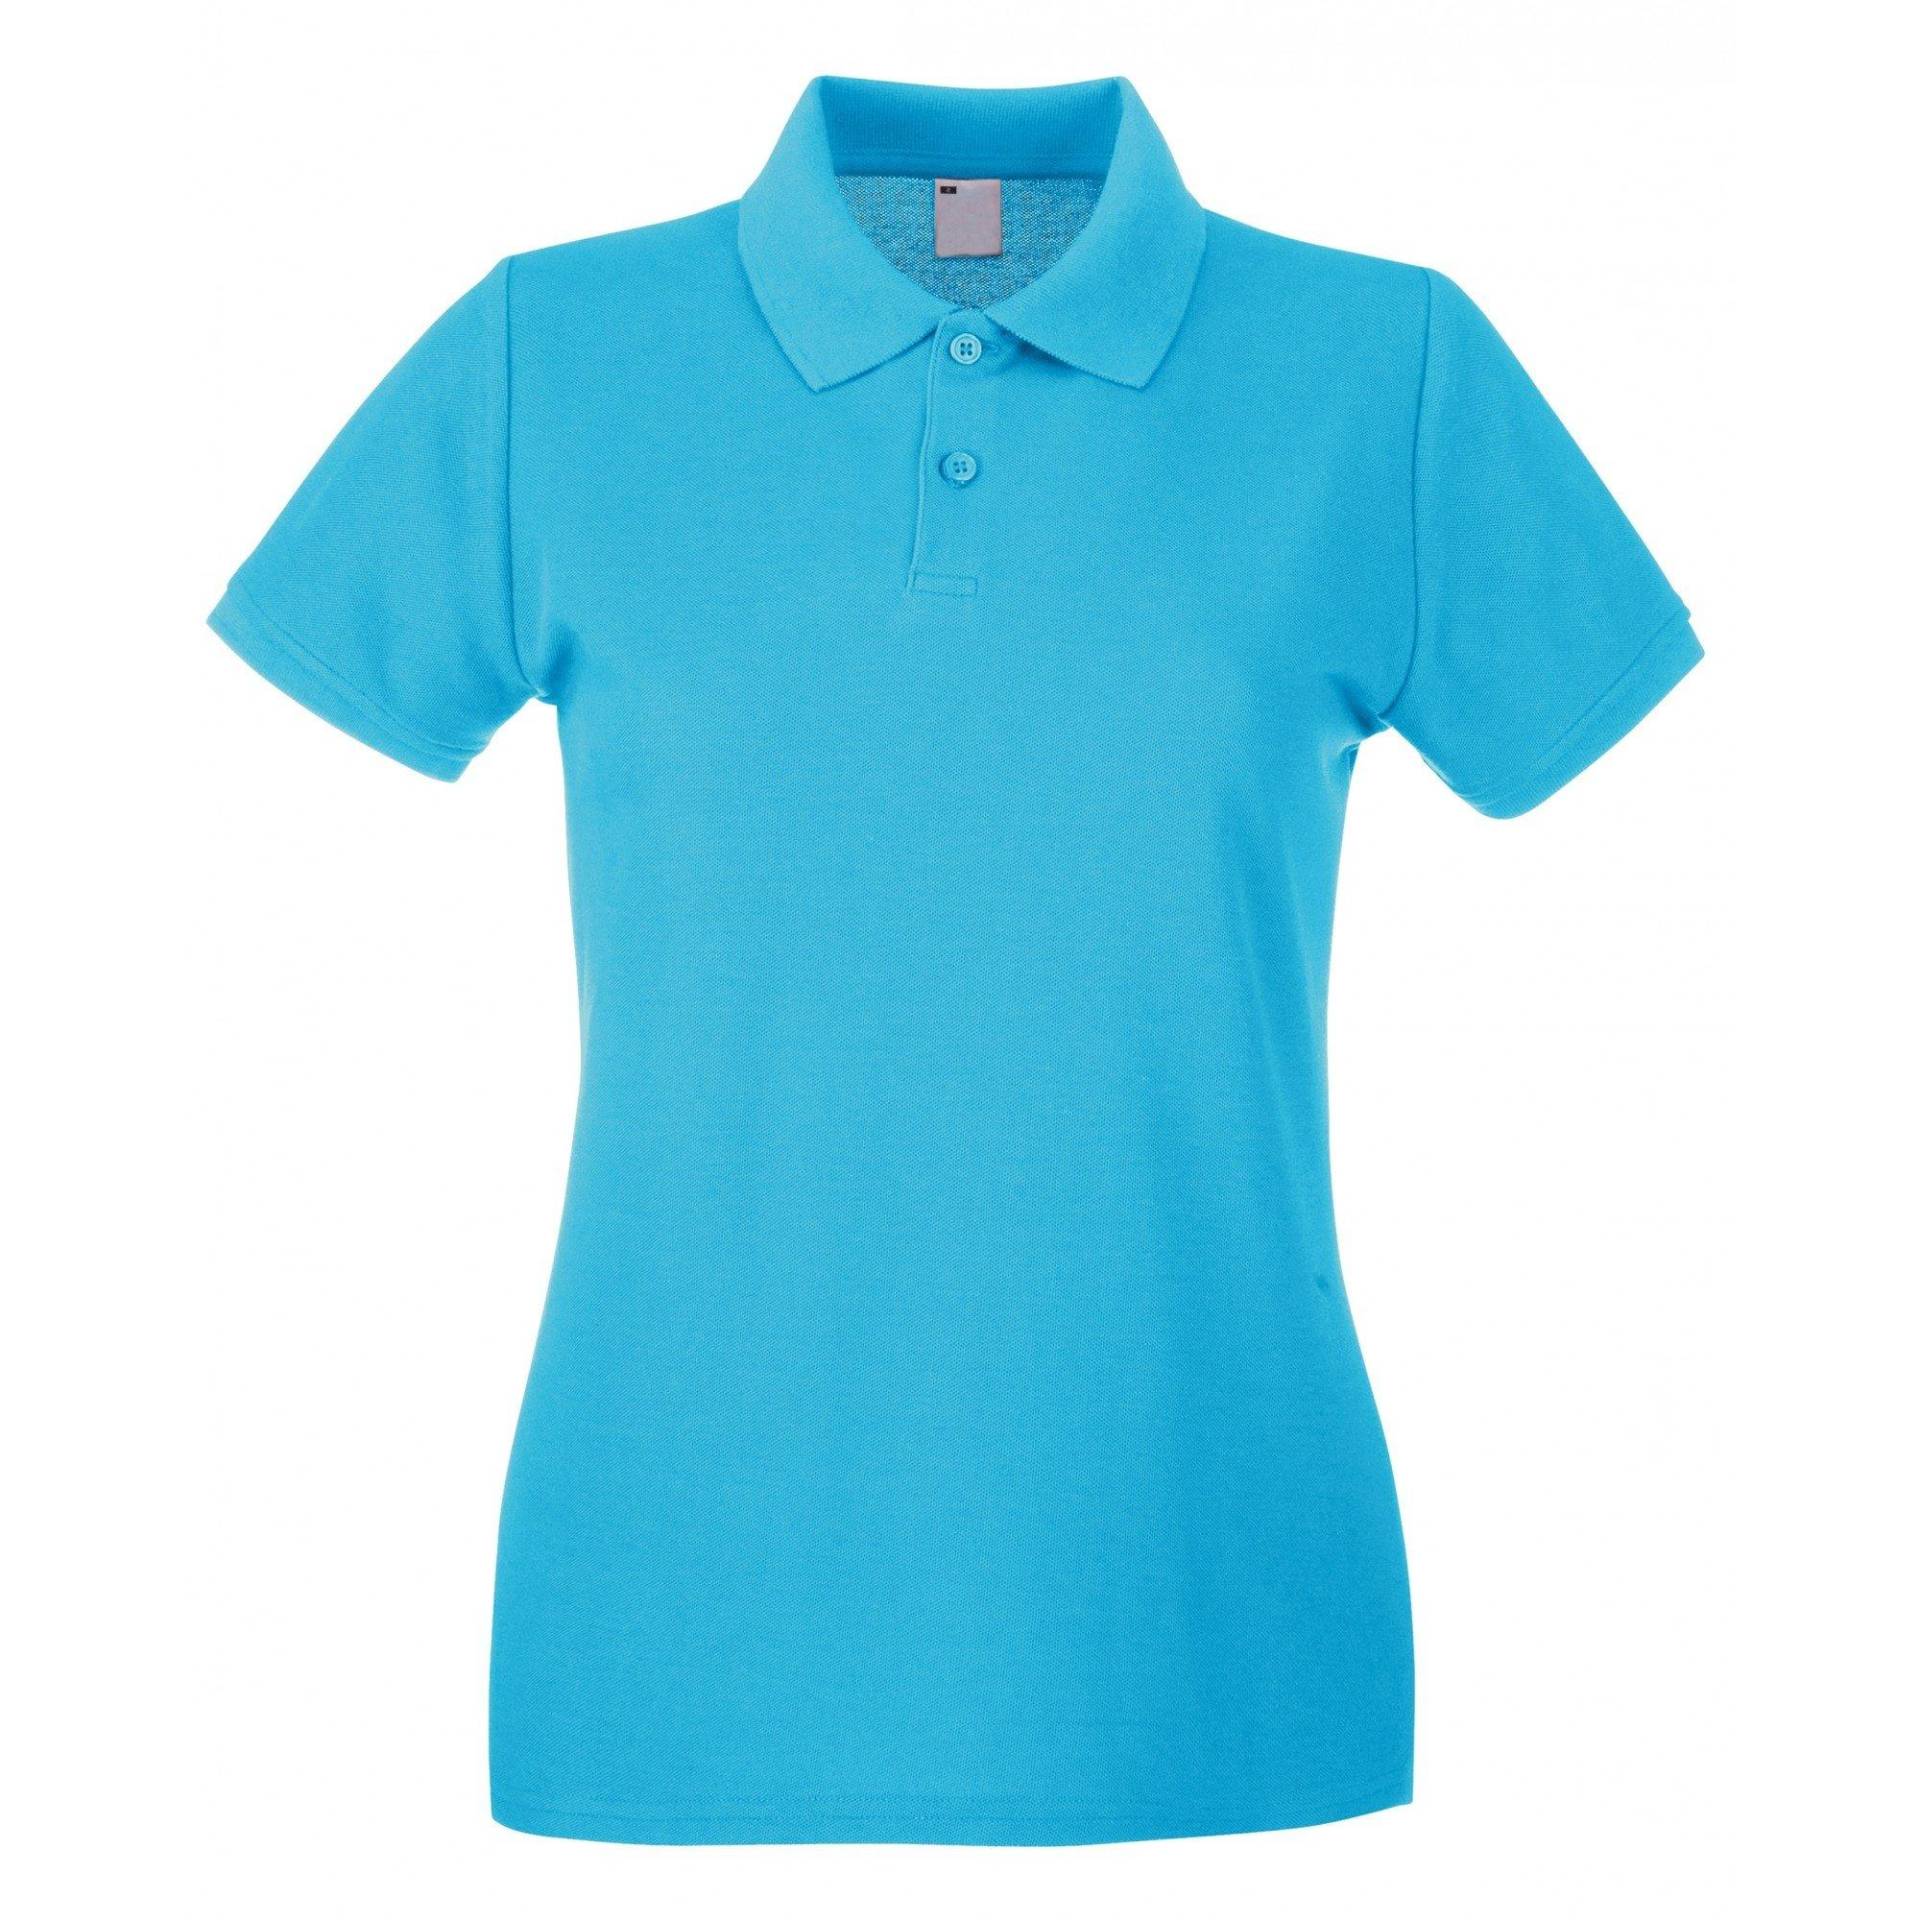 Poloshirt, Figurbetont, Kurzärmlig Damen Cyan-Blau XXL von Universal Textiles